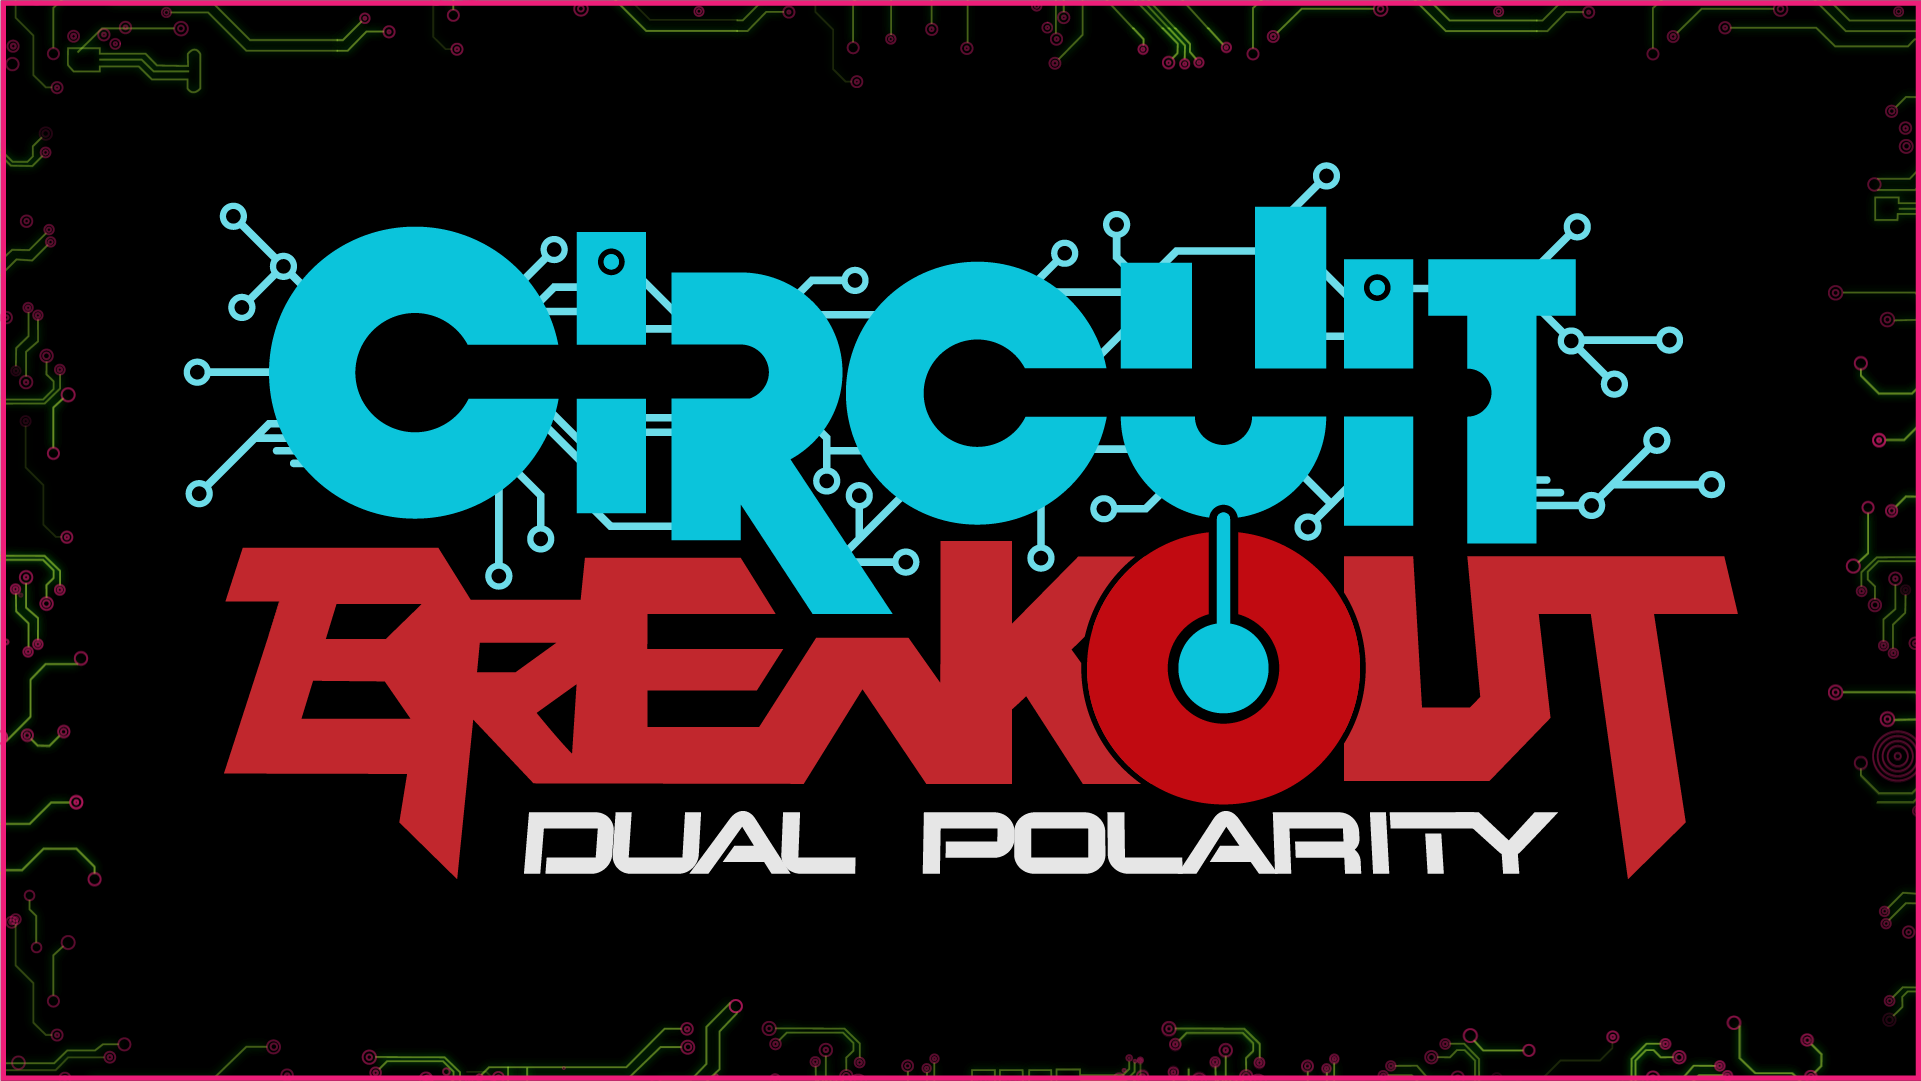 Circuit Breakout: Dual Polarity